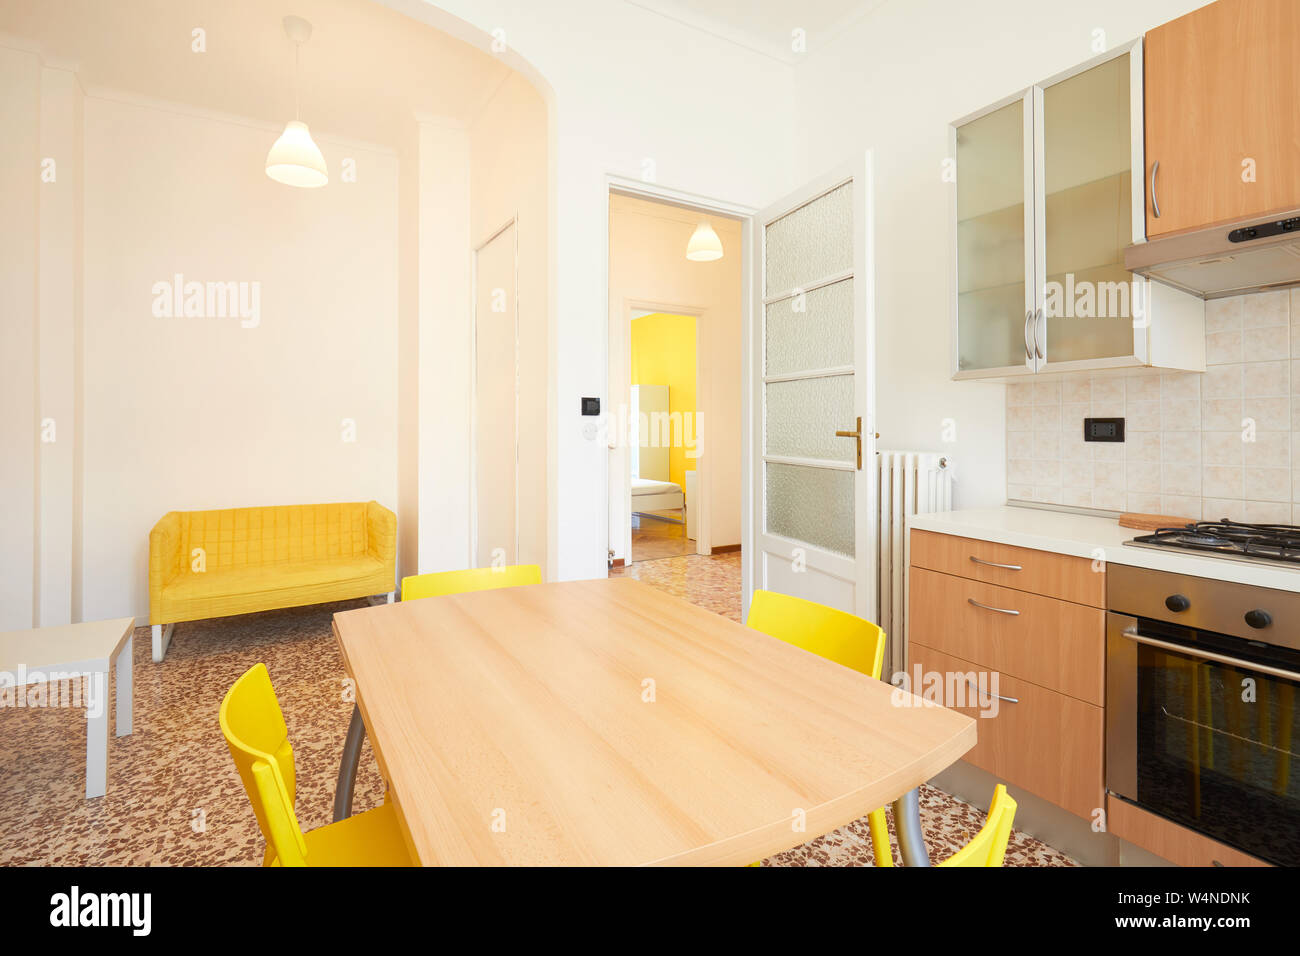 White kitchen interior in renovated, spacious apartment for rent Stock Photo